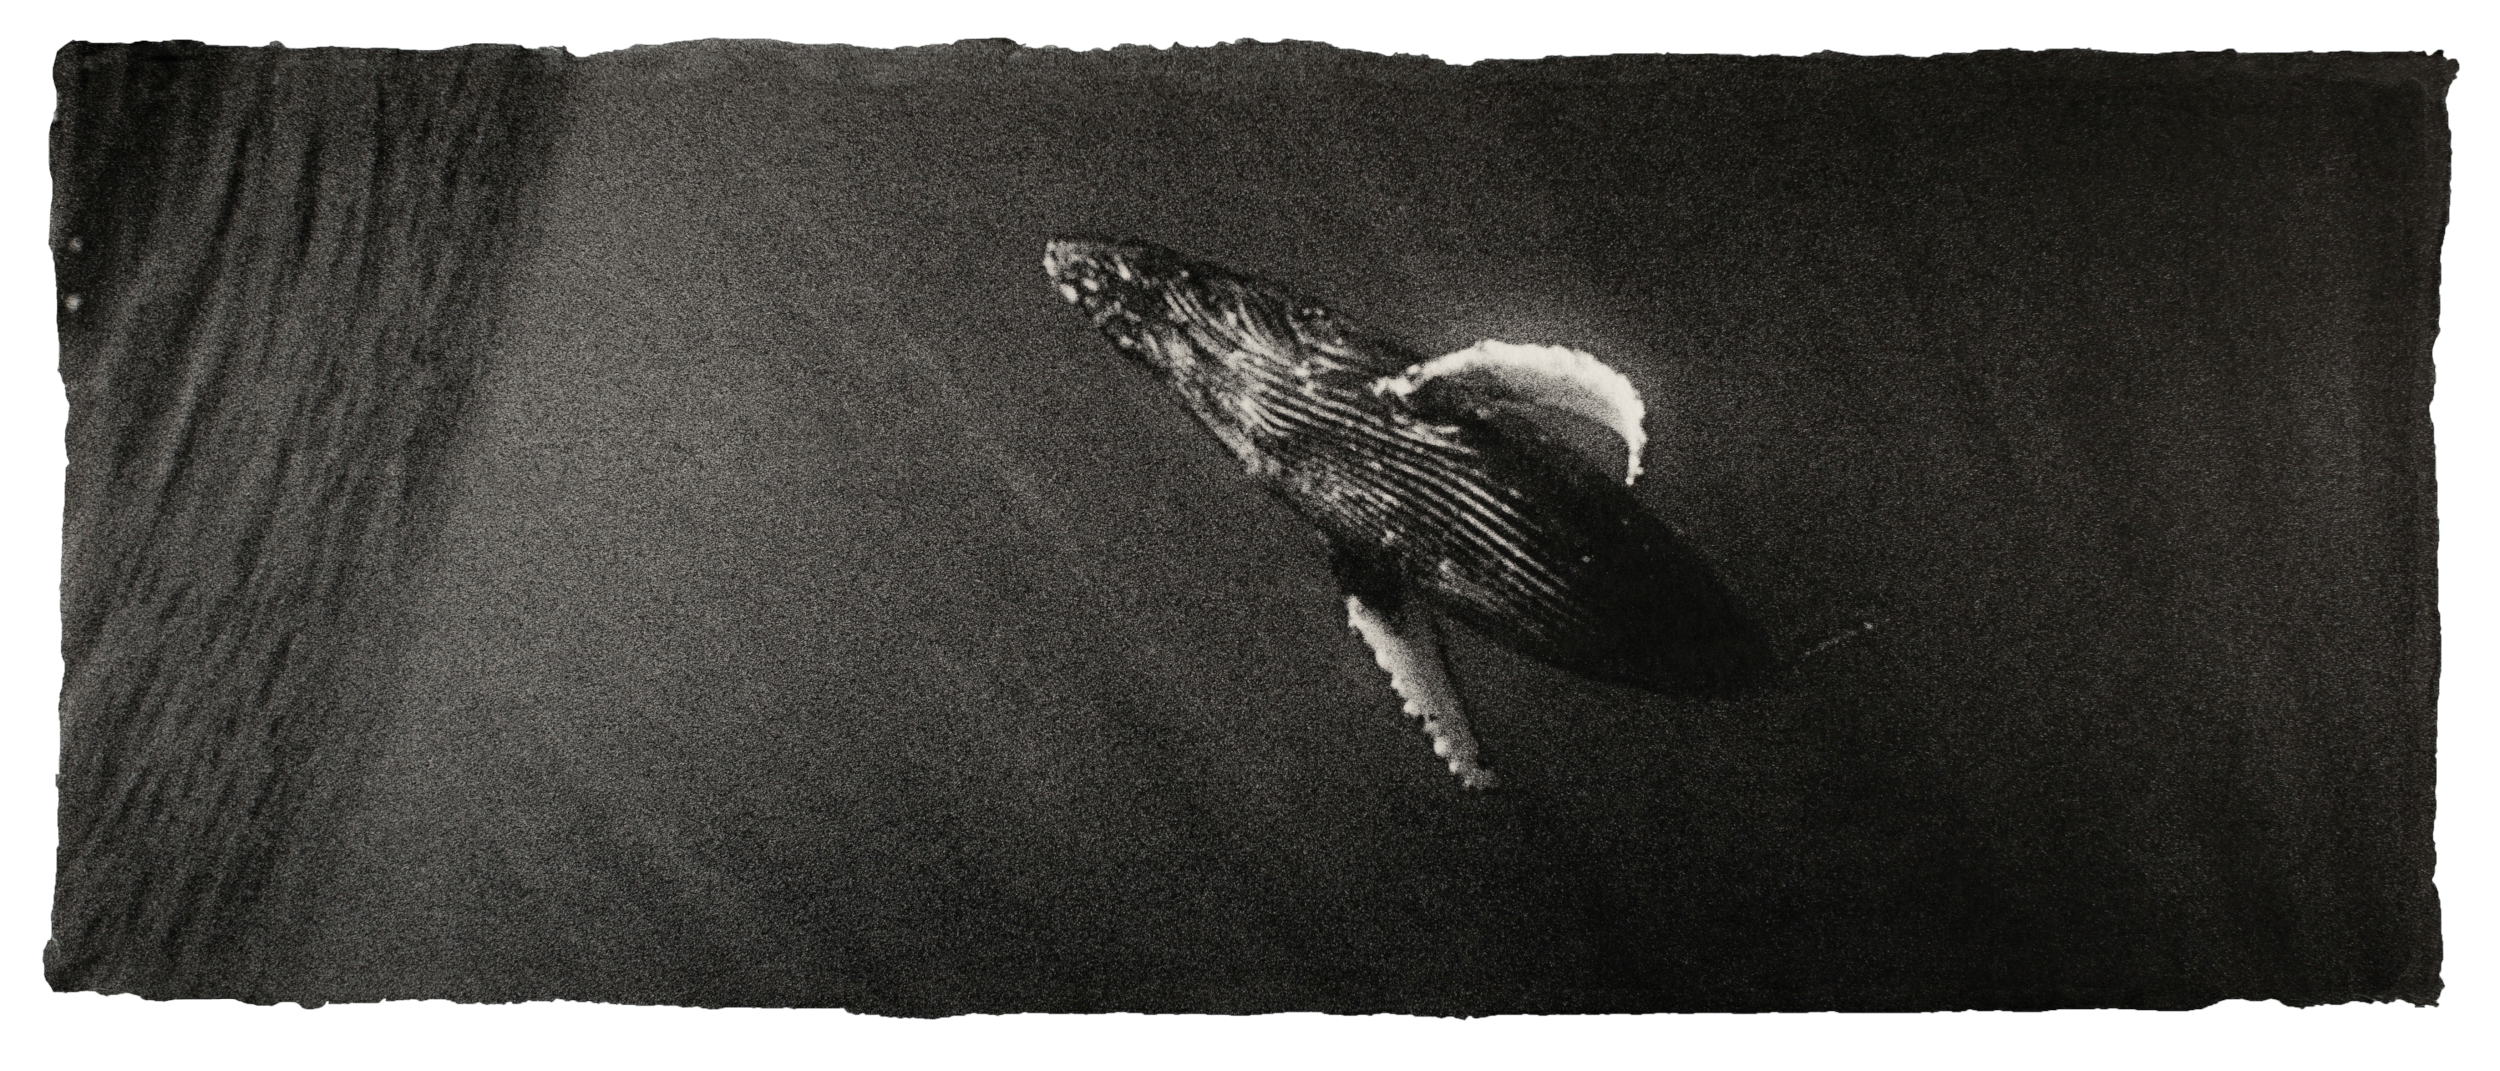  Humpback whale, Hawaii 